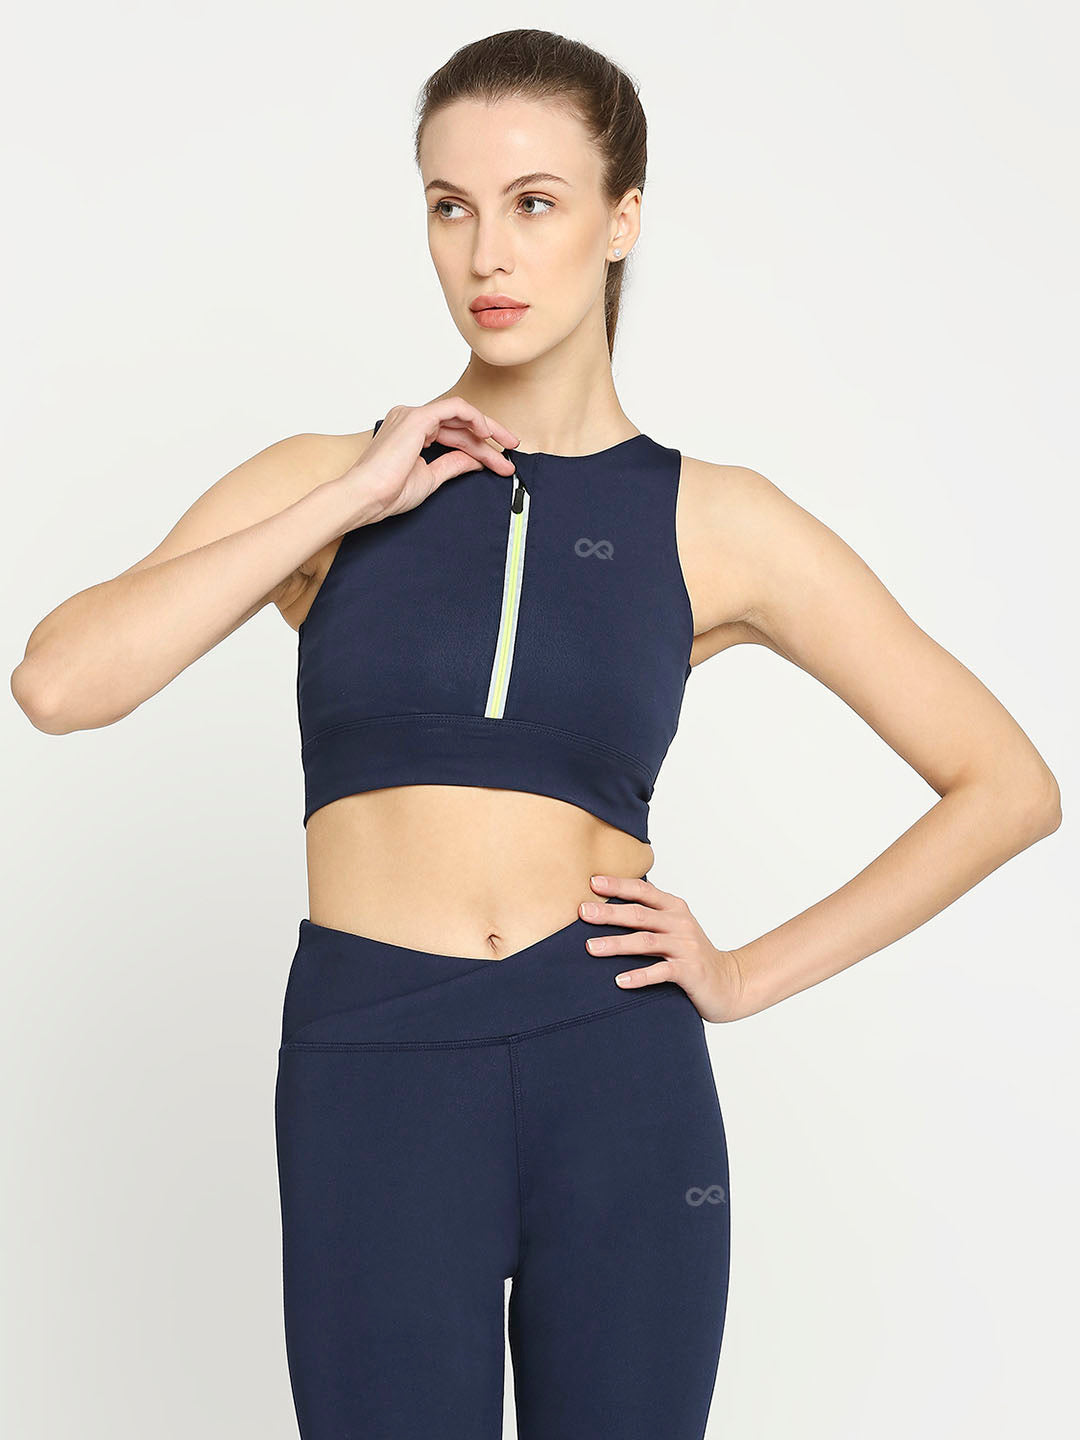 Lady Gym Wear Navy Blue Solid Color Yoga Bra Adjustable Strap Sports Bra -  China Sports Bra and Yoga Wear price